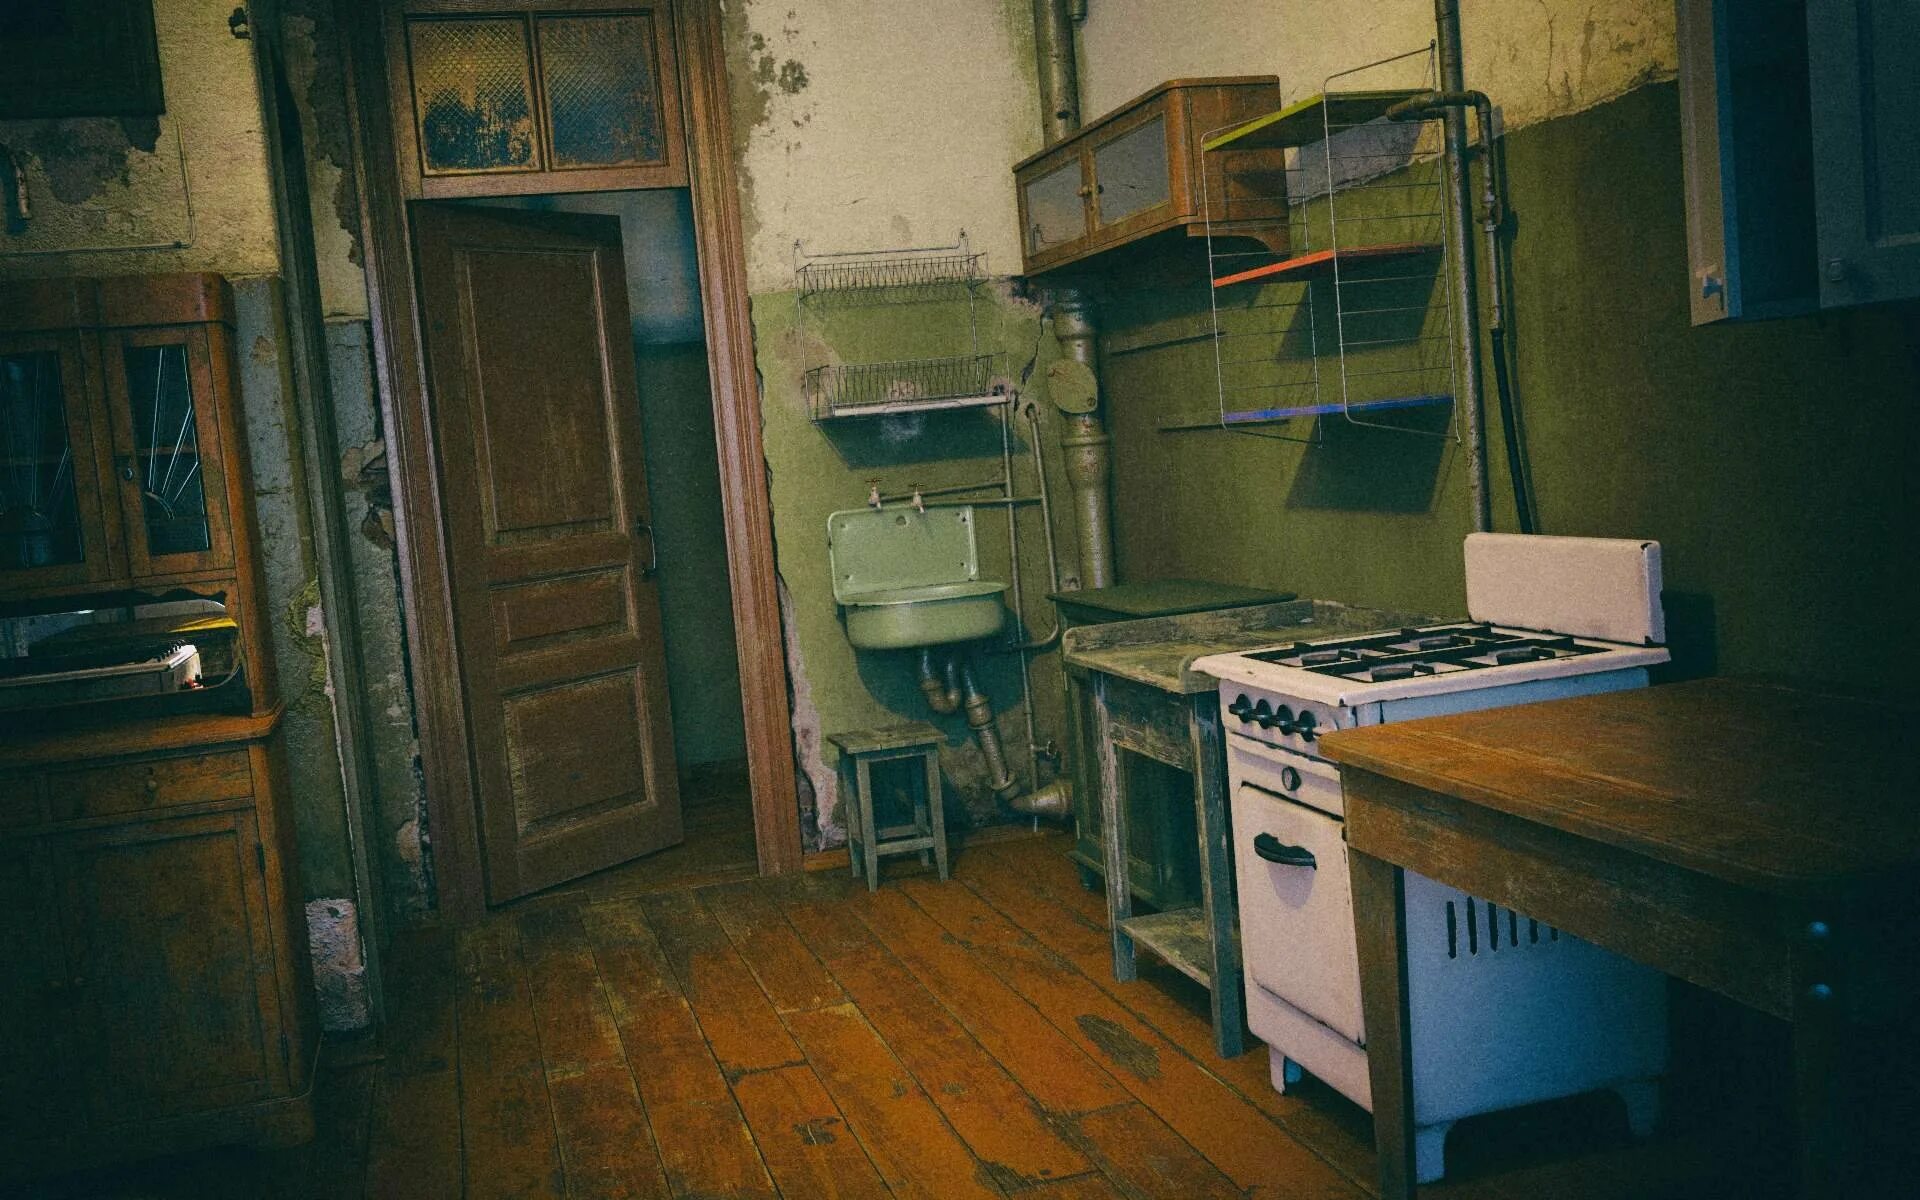 Продажи квартира коммуналка. Советская кухня. Старая квартира. Комната в коммуналке. Кухня в старой квартире.